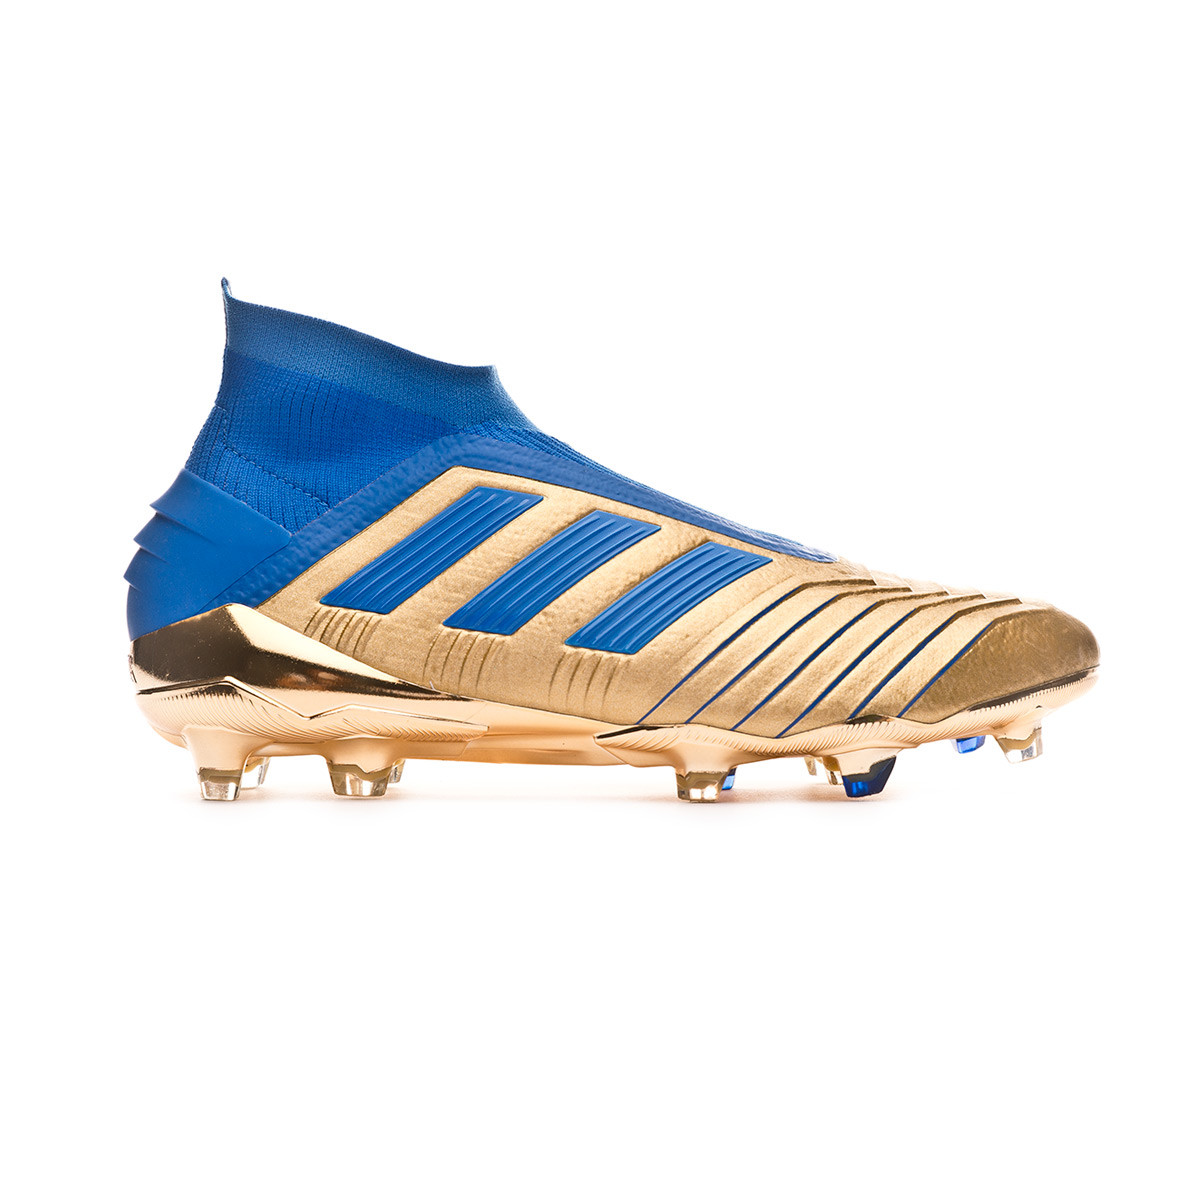 adidas predator gold blue